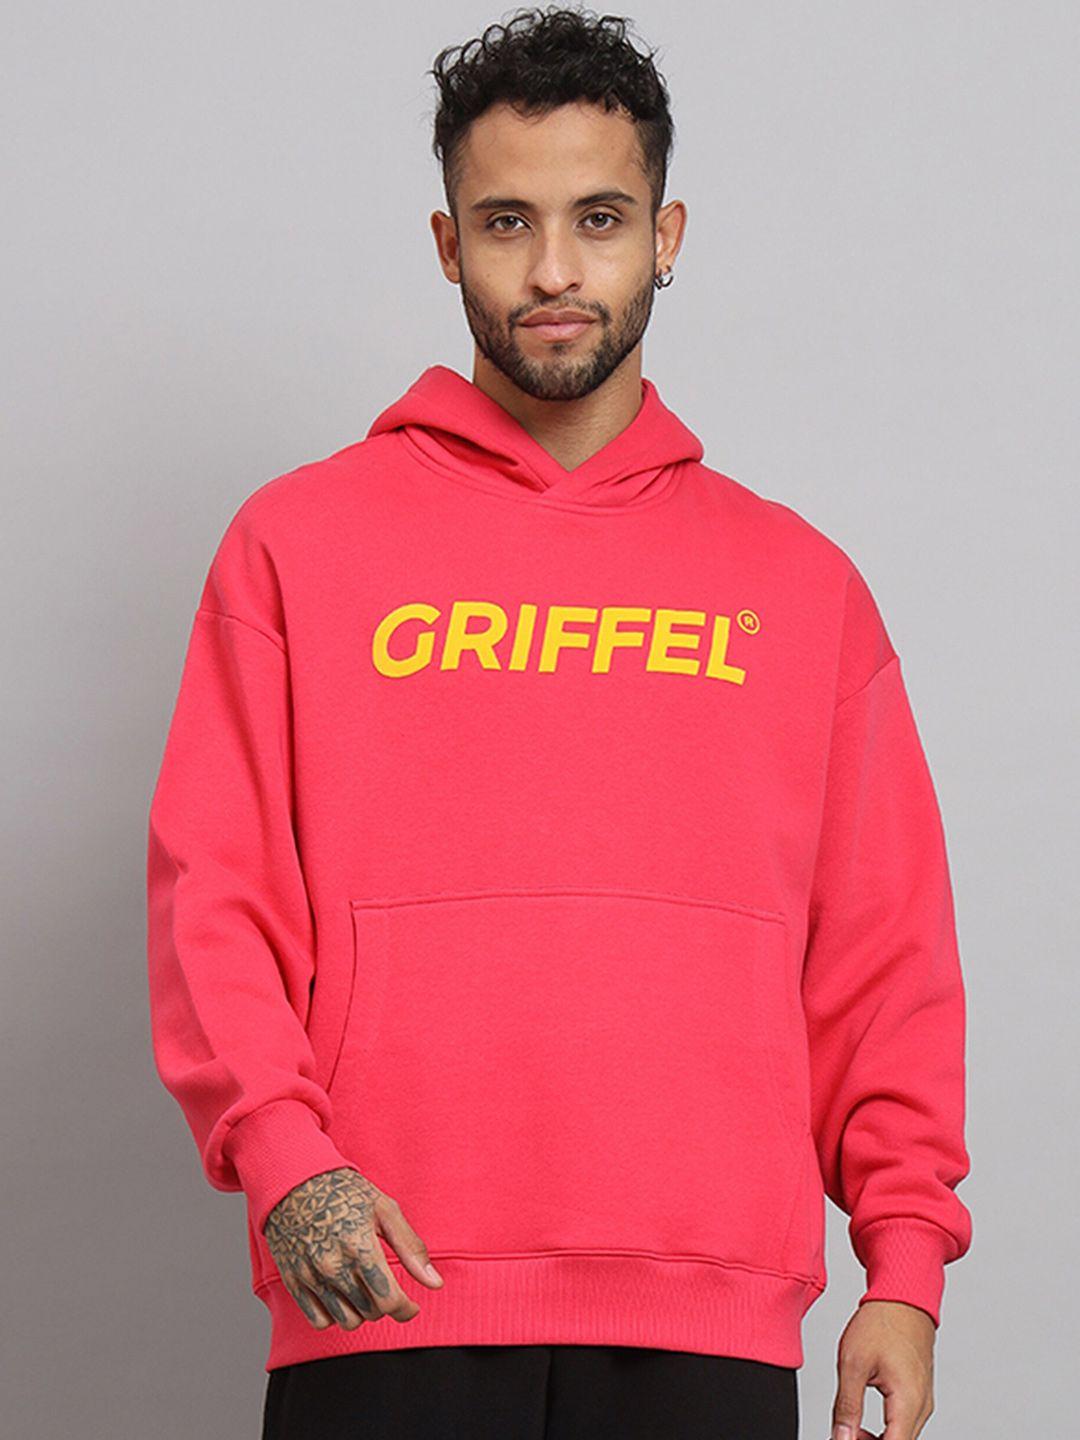 griffel typography printed fleece hooded pullover sweatshirt